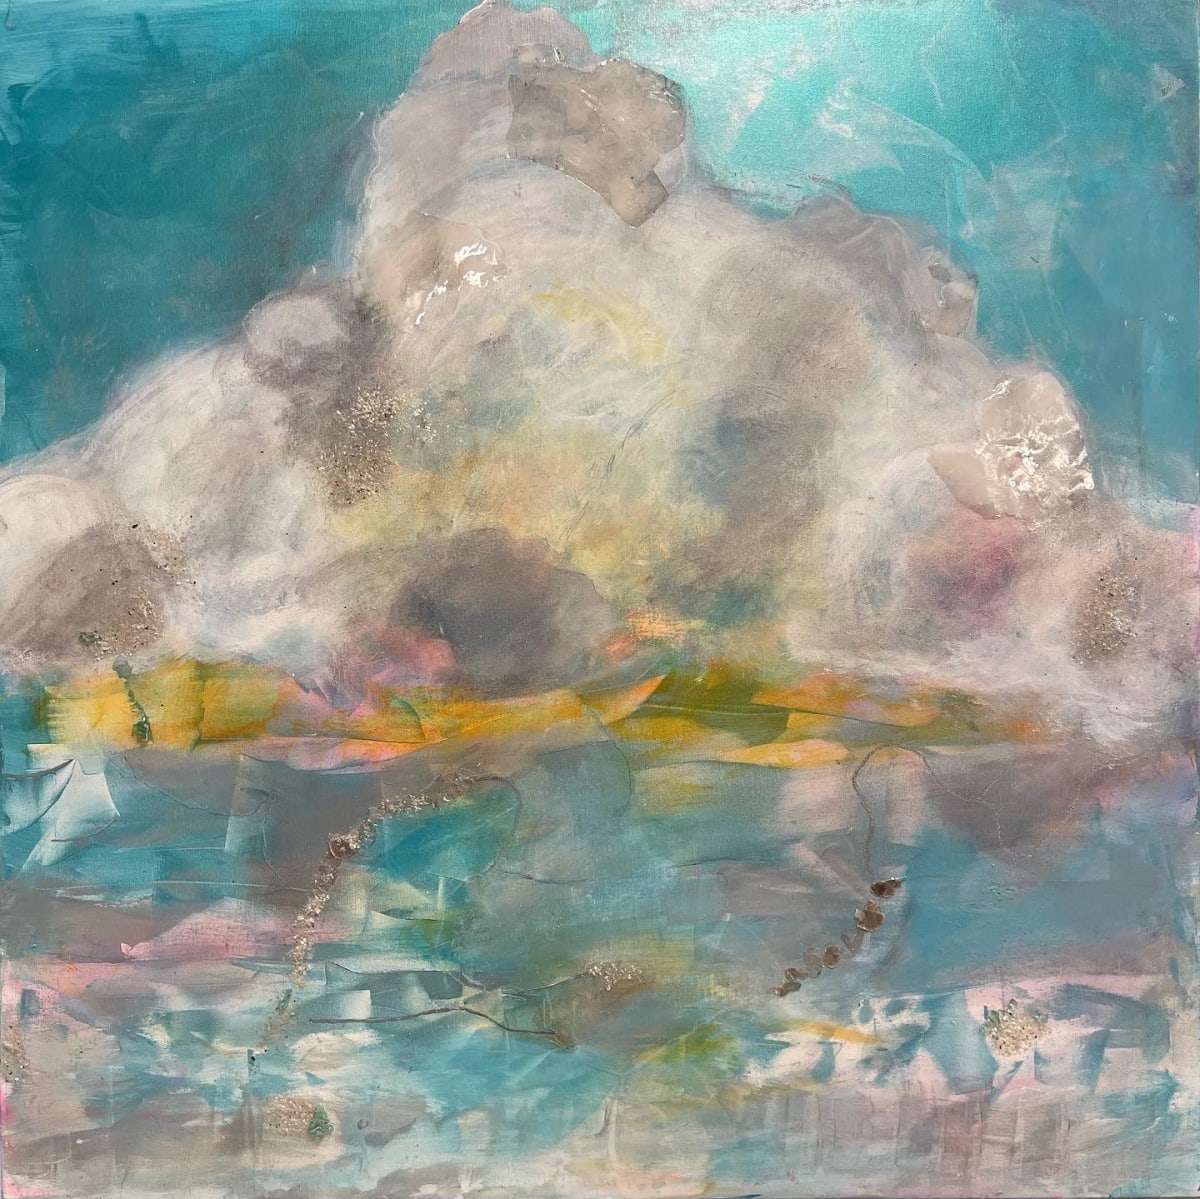 Sky and Sea Turbulence by Bonnie Levinson 